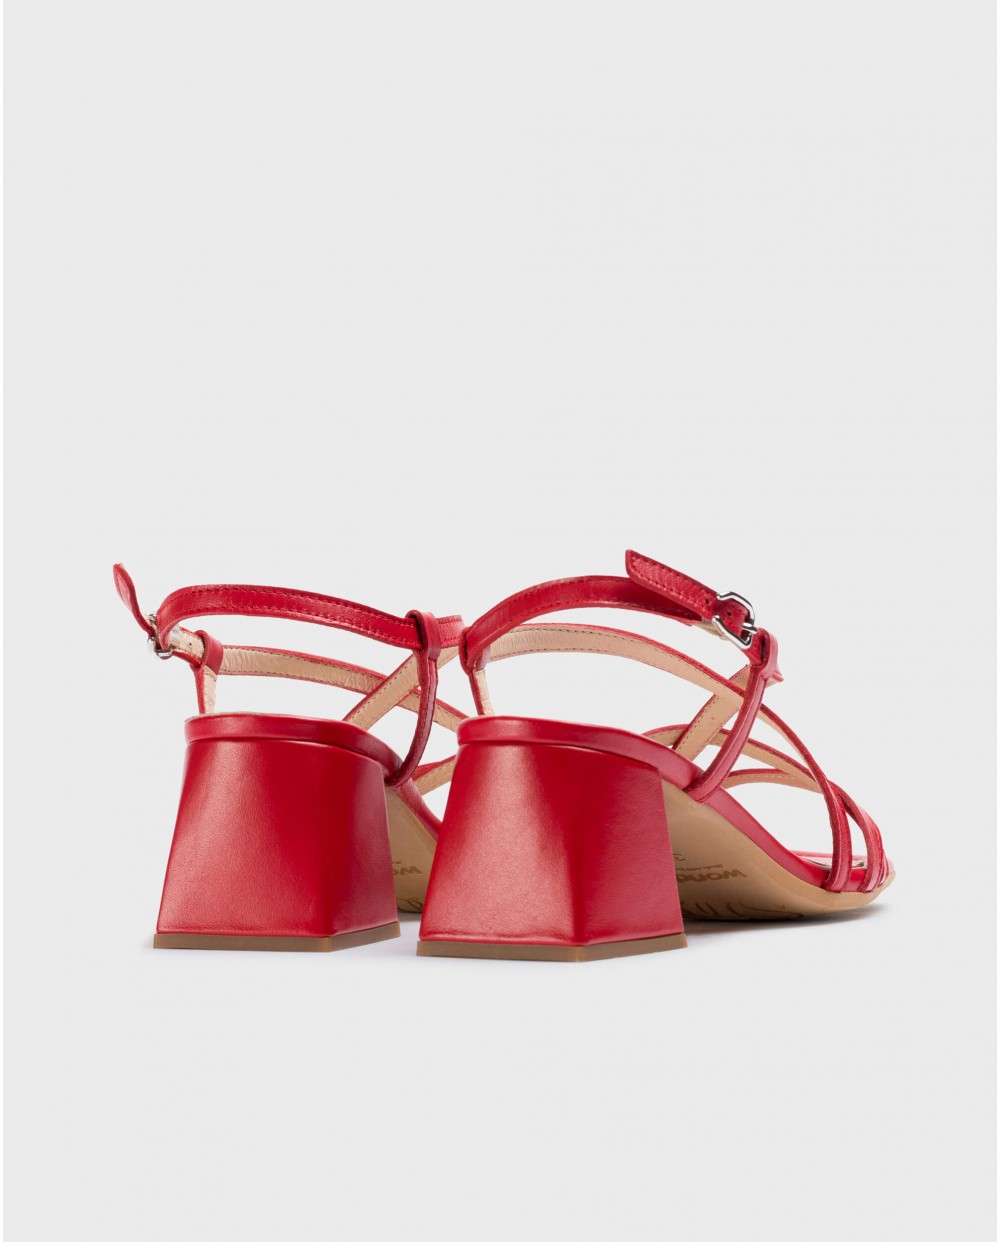 Red Sofia heeled sandals